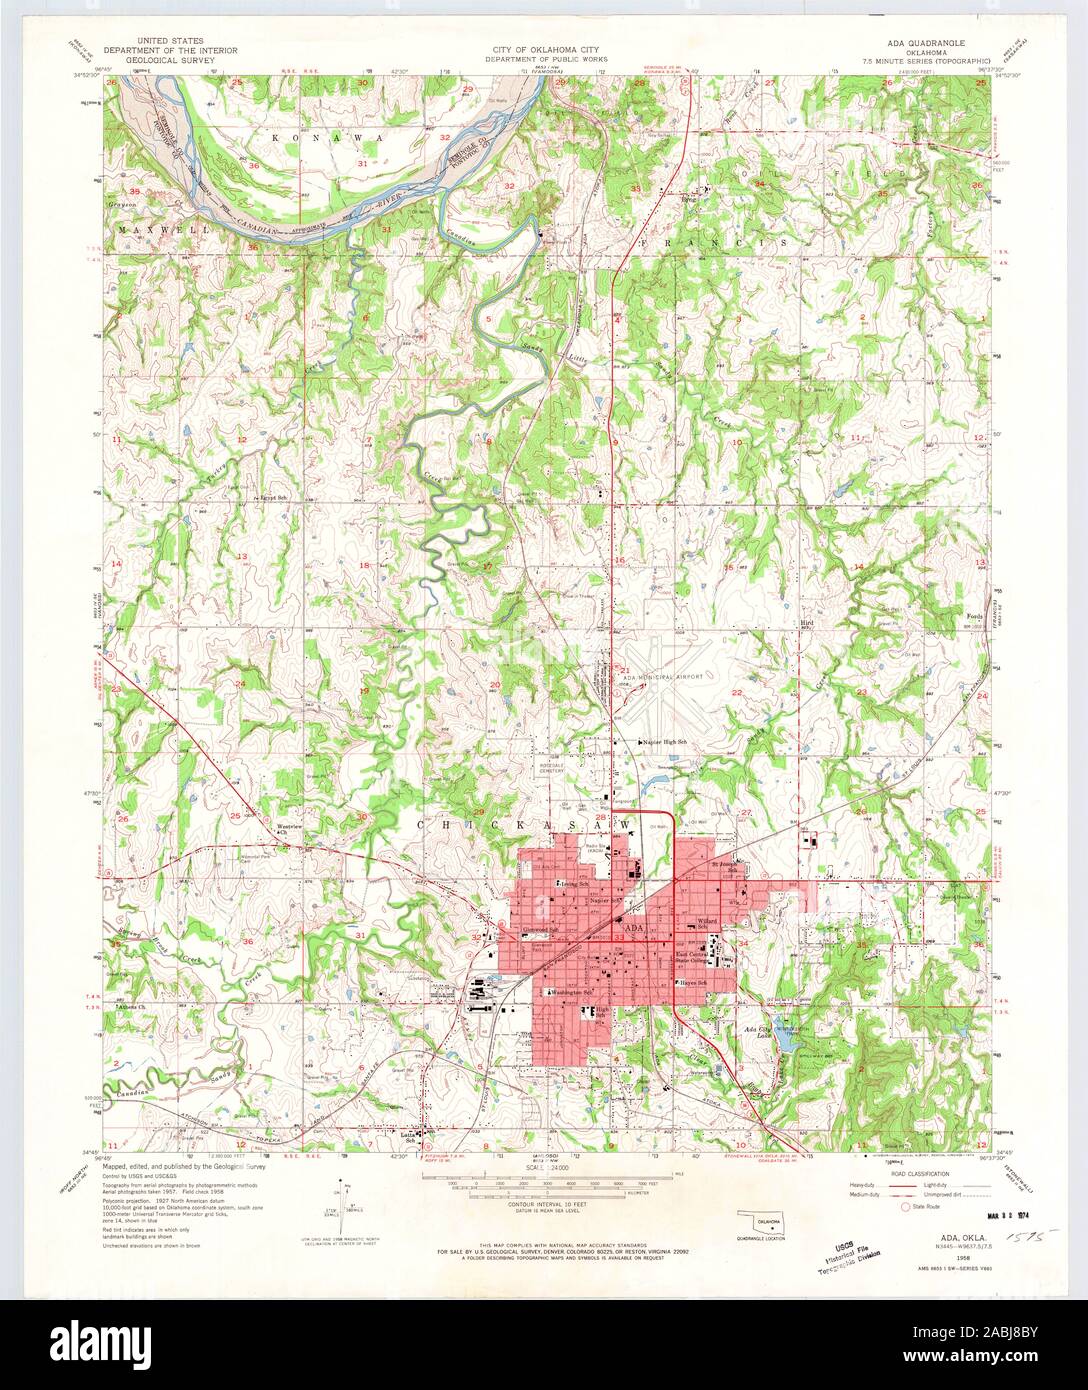 USGS Topographic Map PROTECTION Kansas Oklahoma 1985-100K 